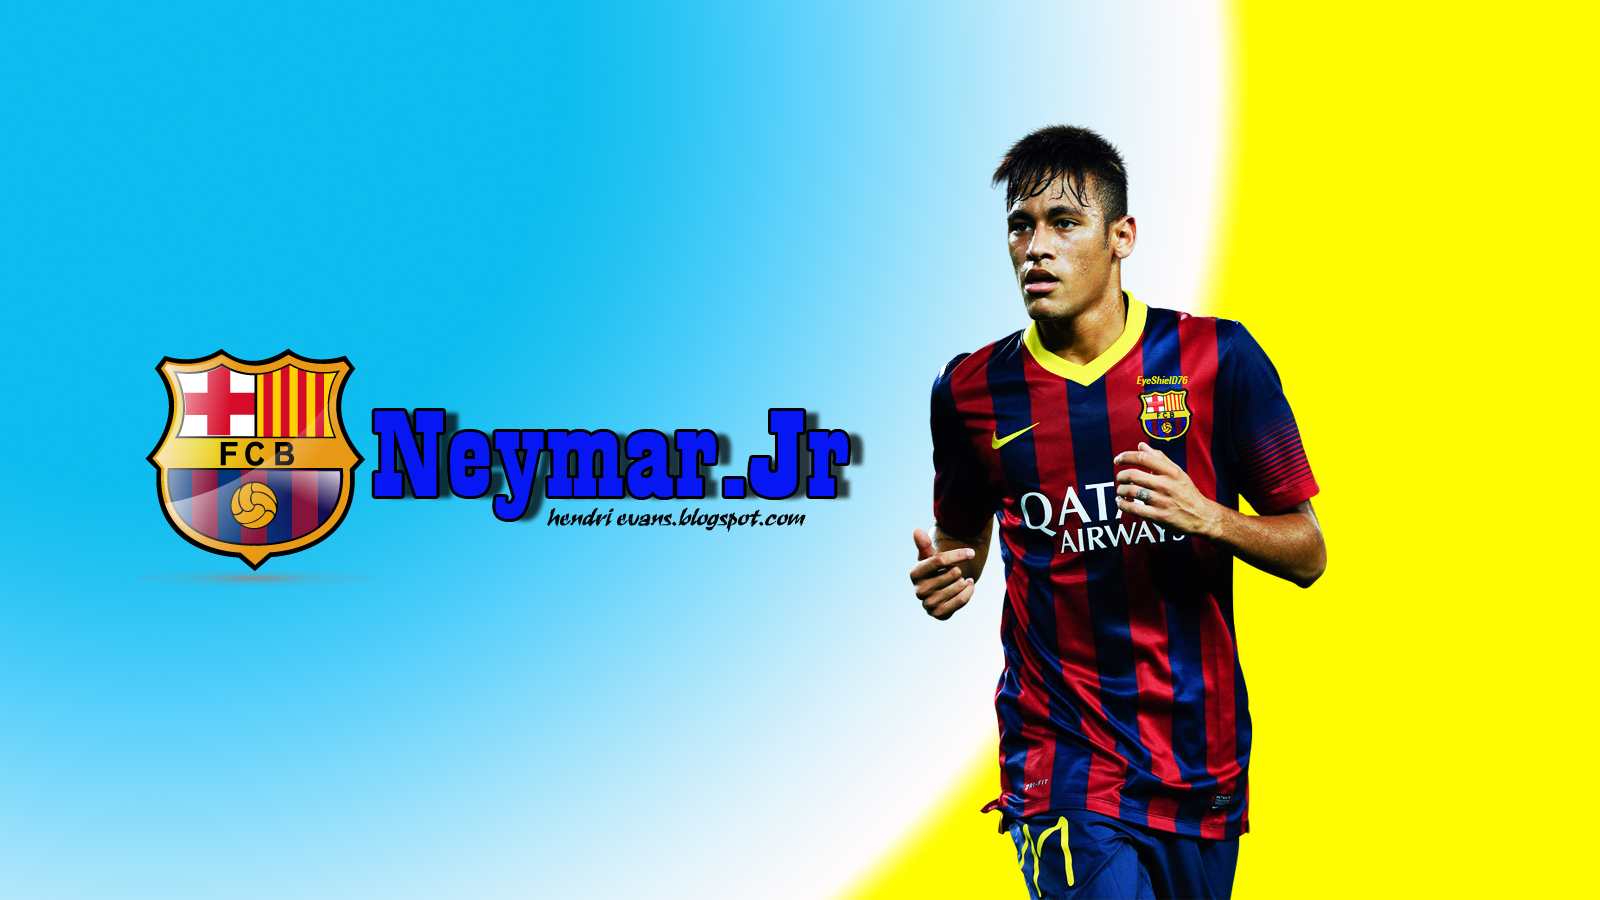 FC Barcelona Neymar Jr